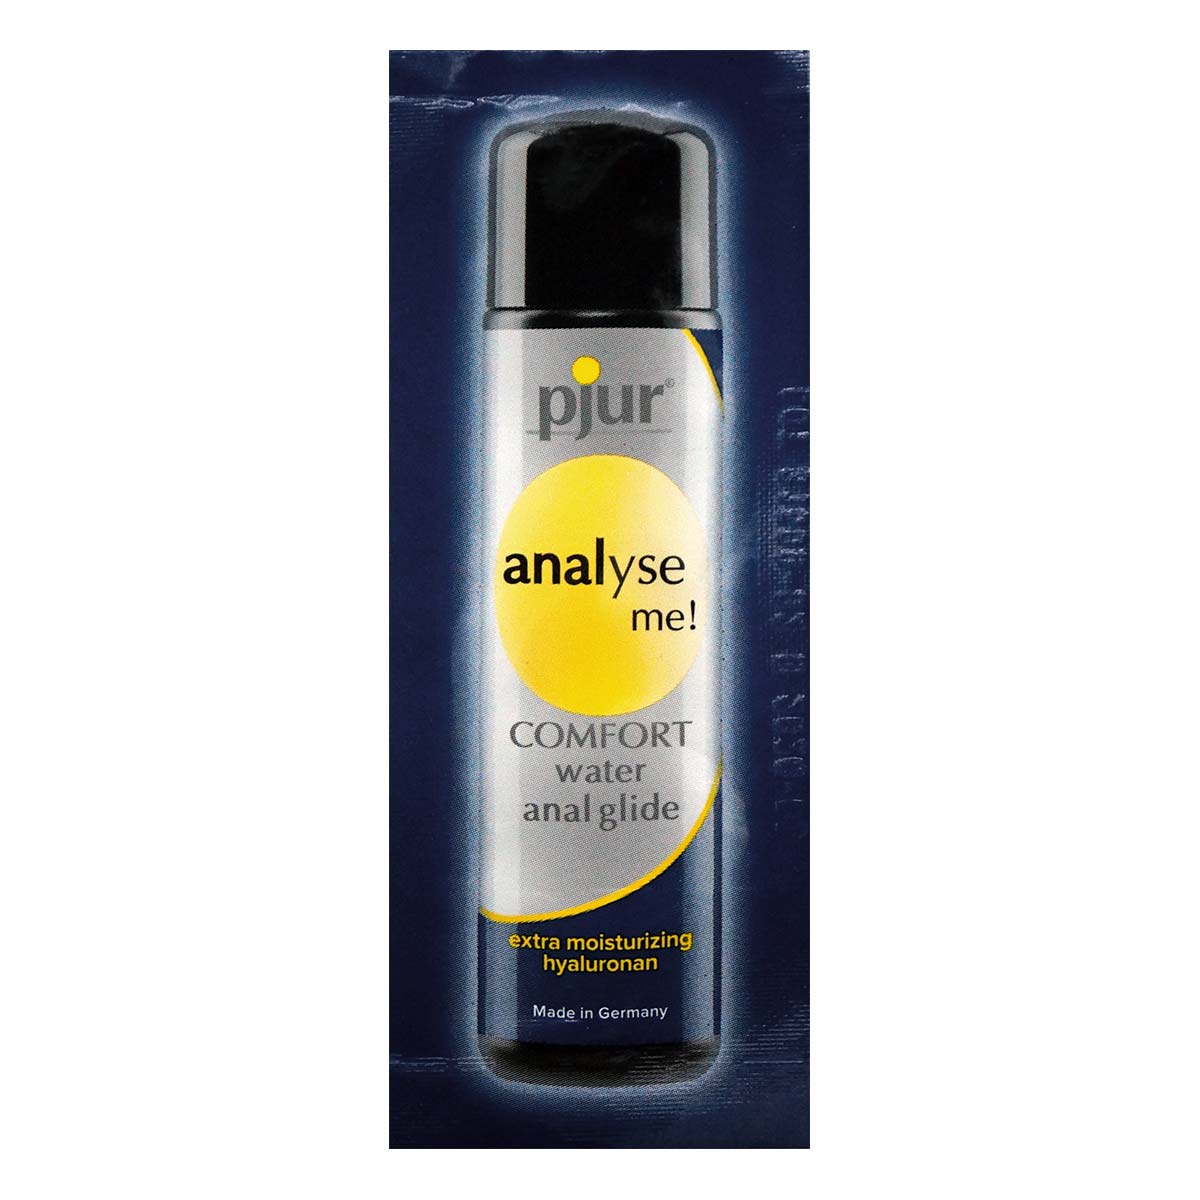 pjur analyse me! COMFORT Water Anal Glide 2ml Water-based Lubricant-p_2